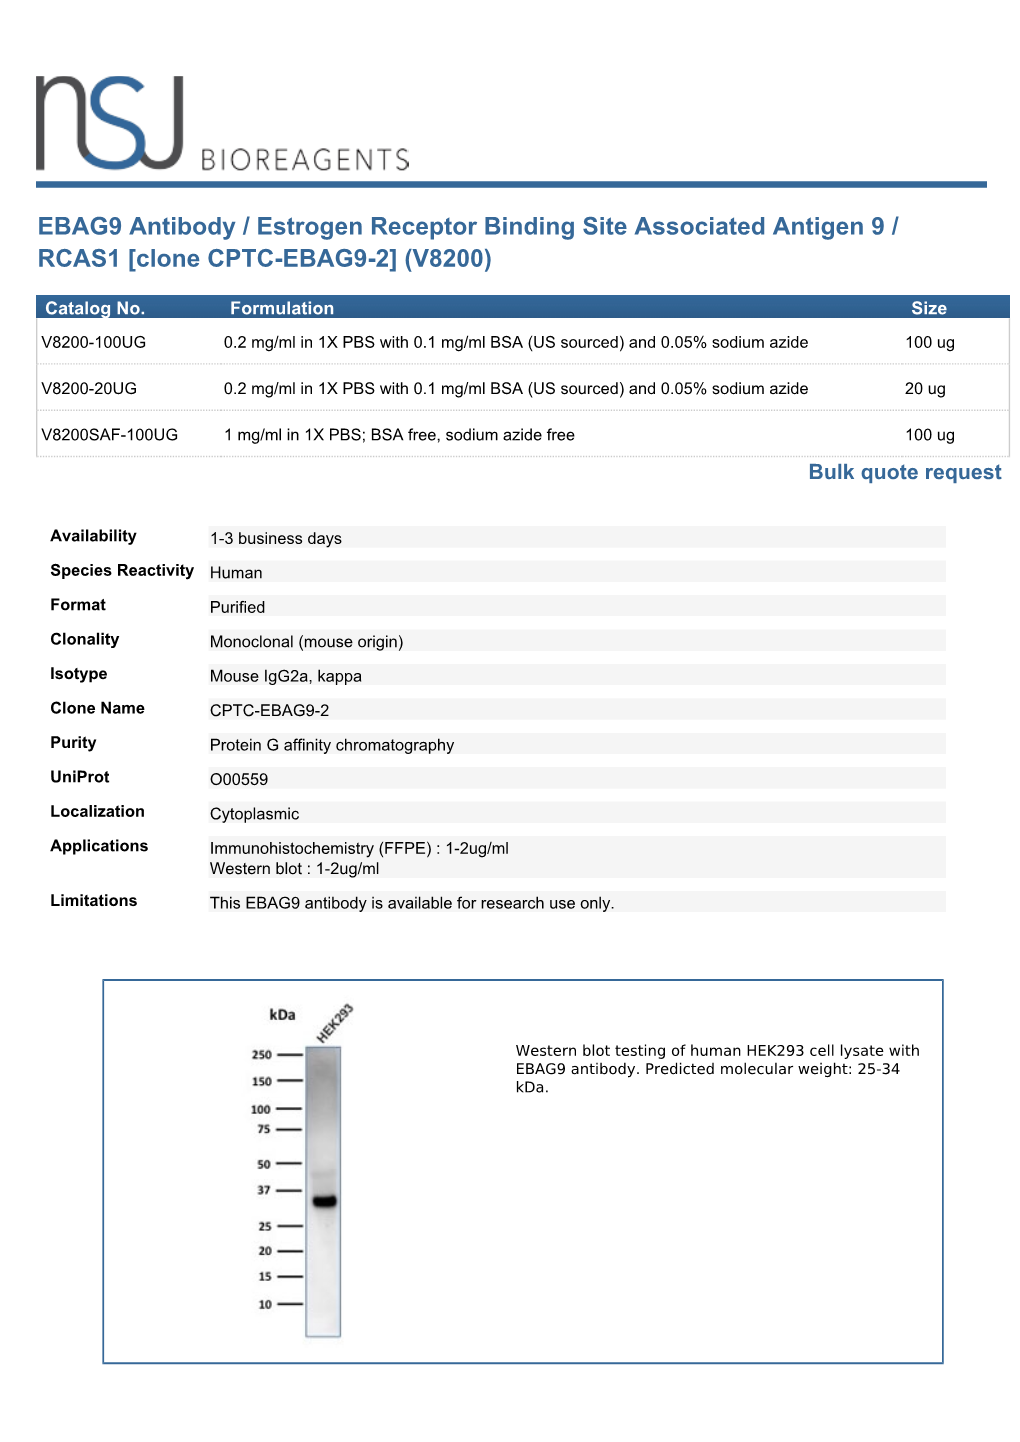 EBAG9 Antibody / Estrogen Receptor Binding Site Associated Antigen 9 / RCAS1 [Clone CPTC-EBAG9-2] (V8200)